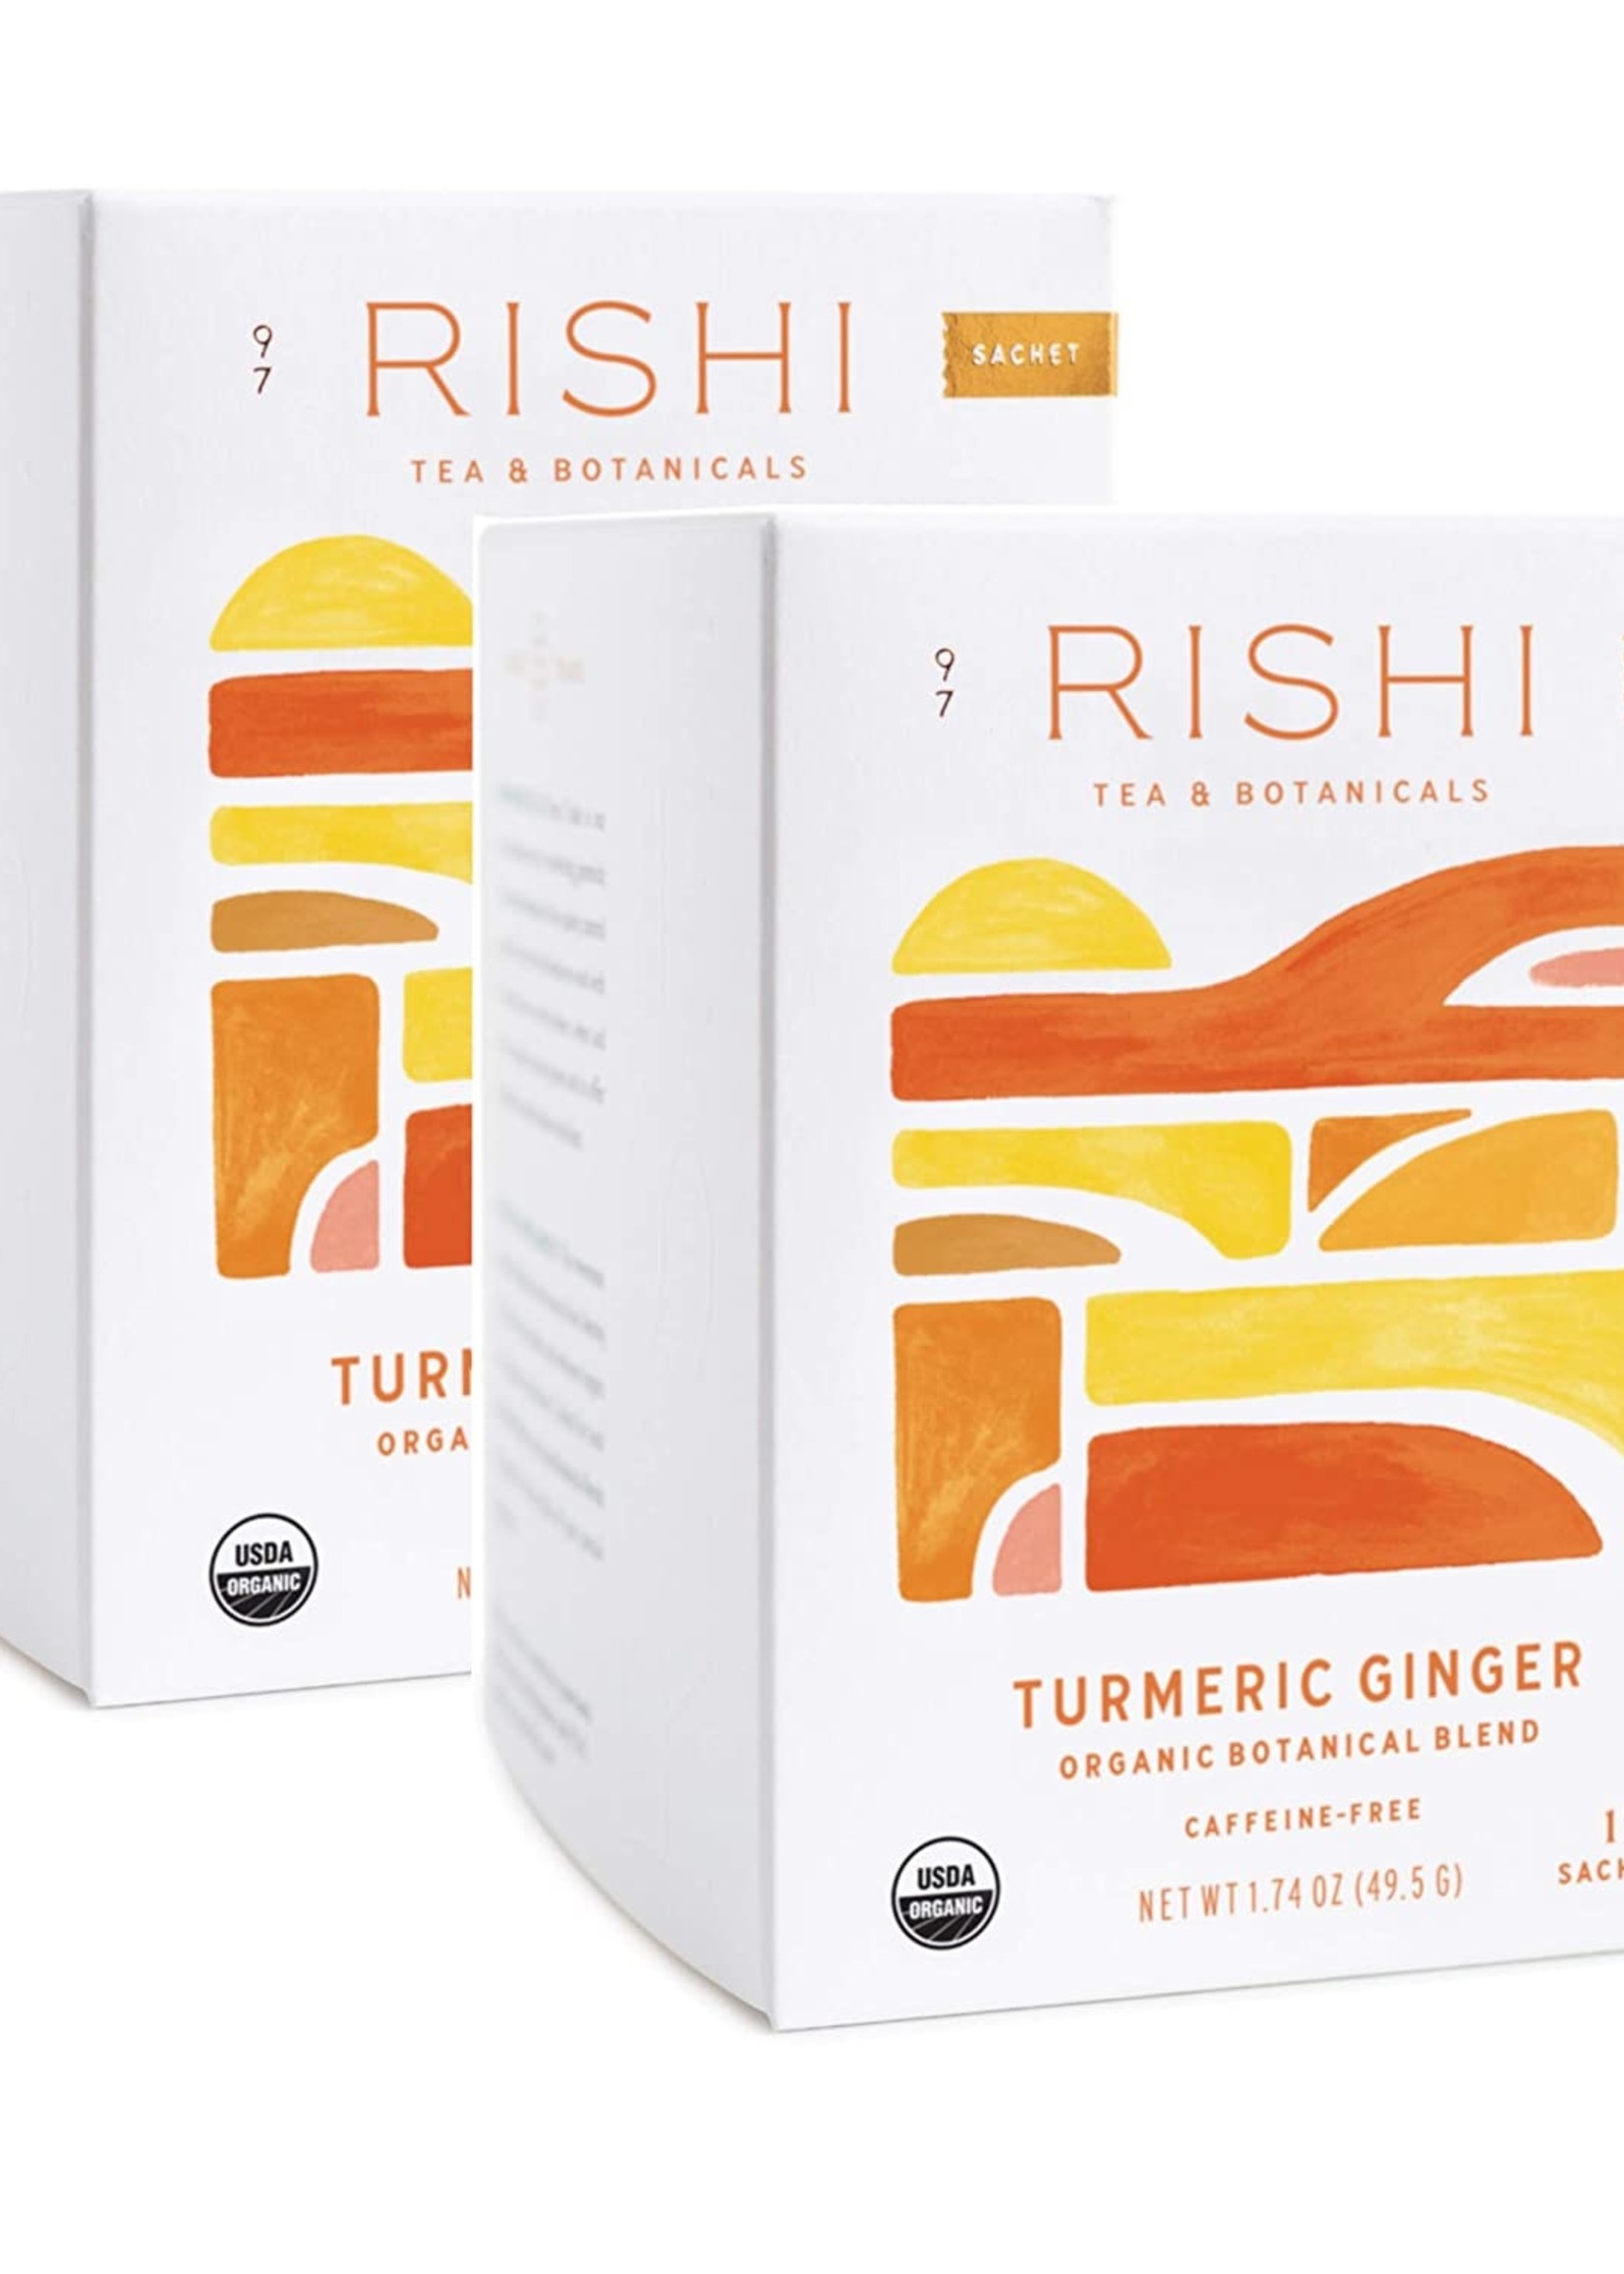 Rishi Rishi, Turmeric Ginger Dry Tea, 15 Sachets